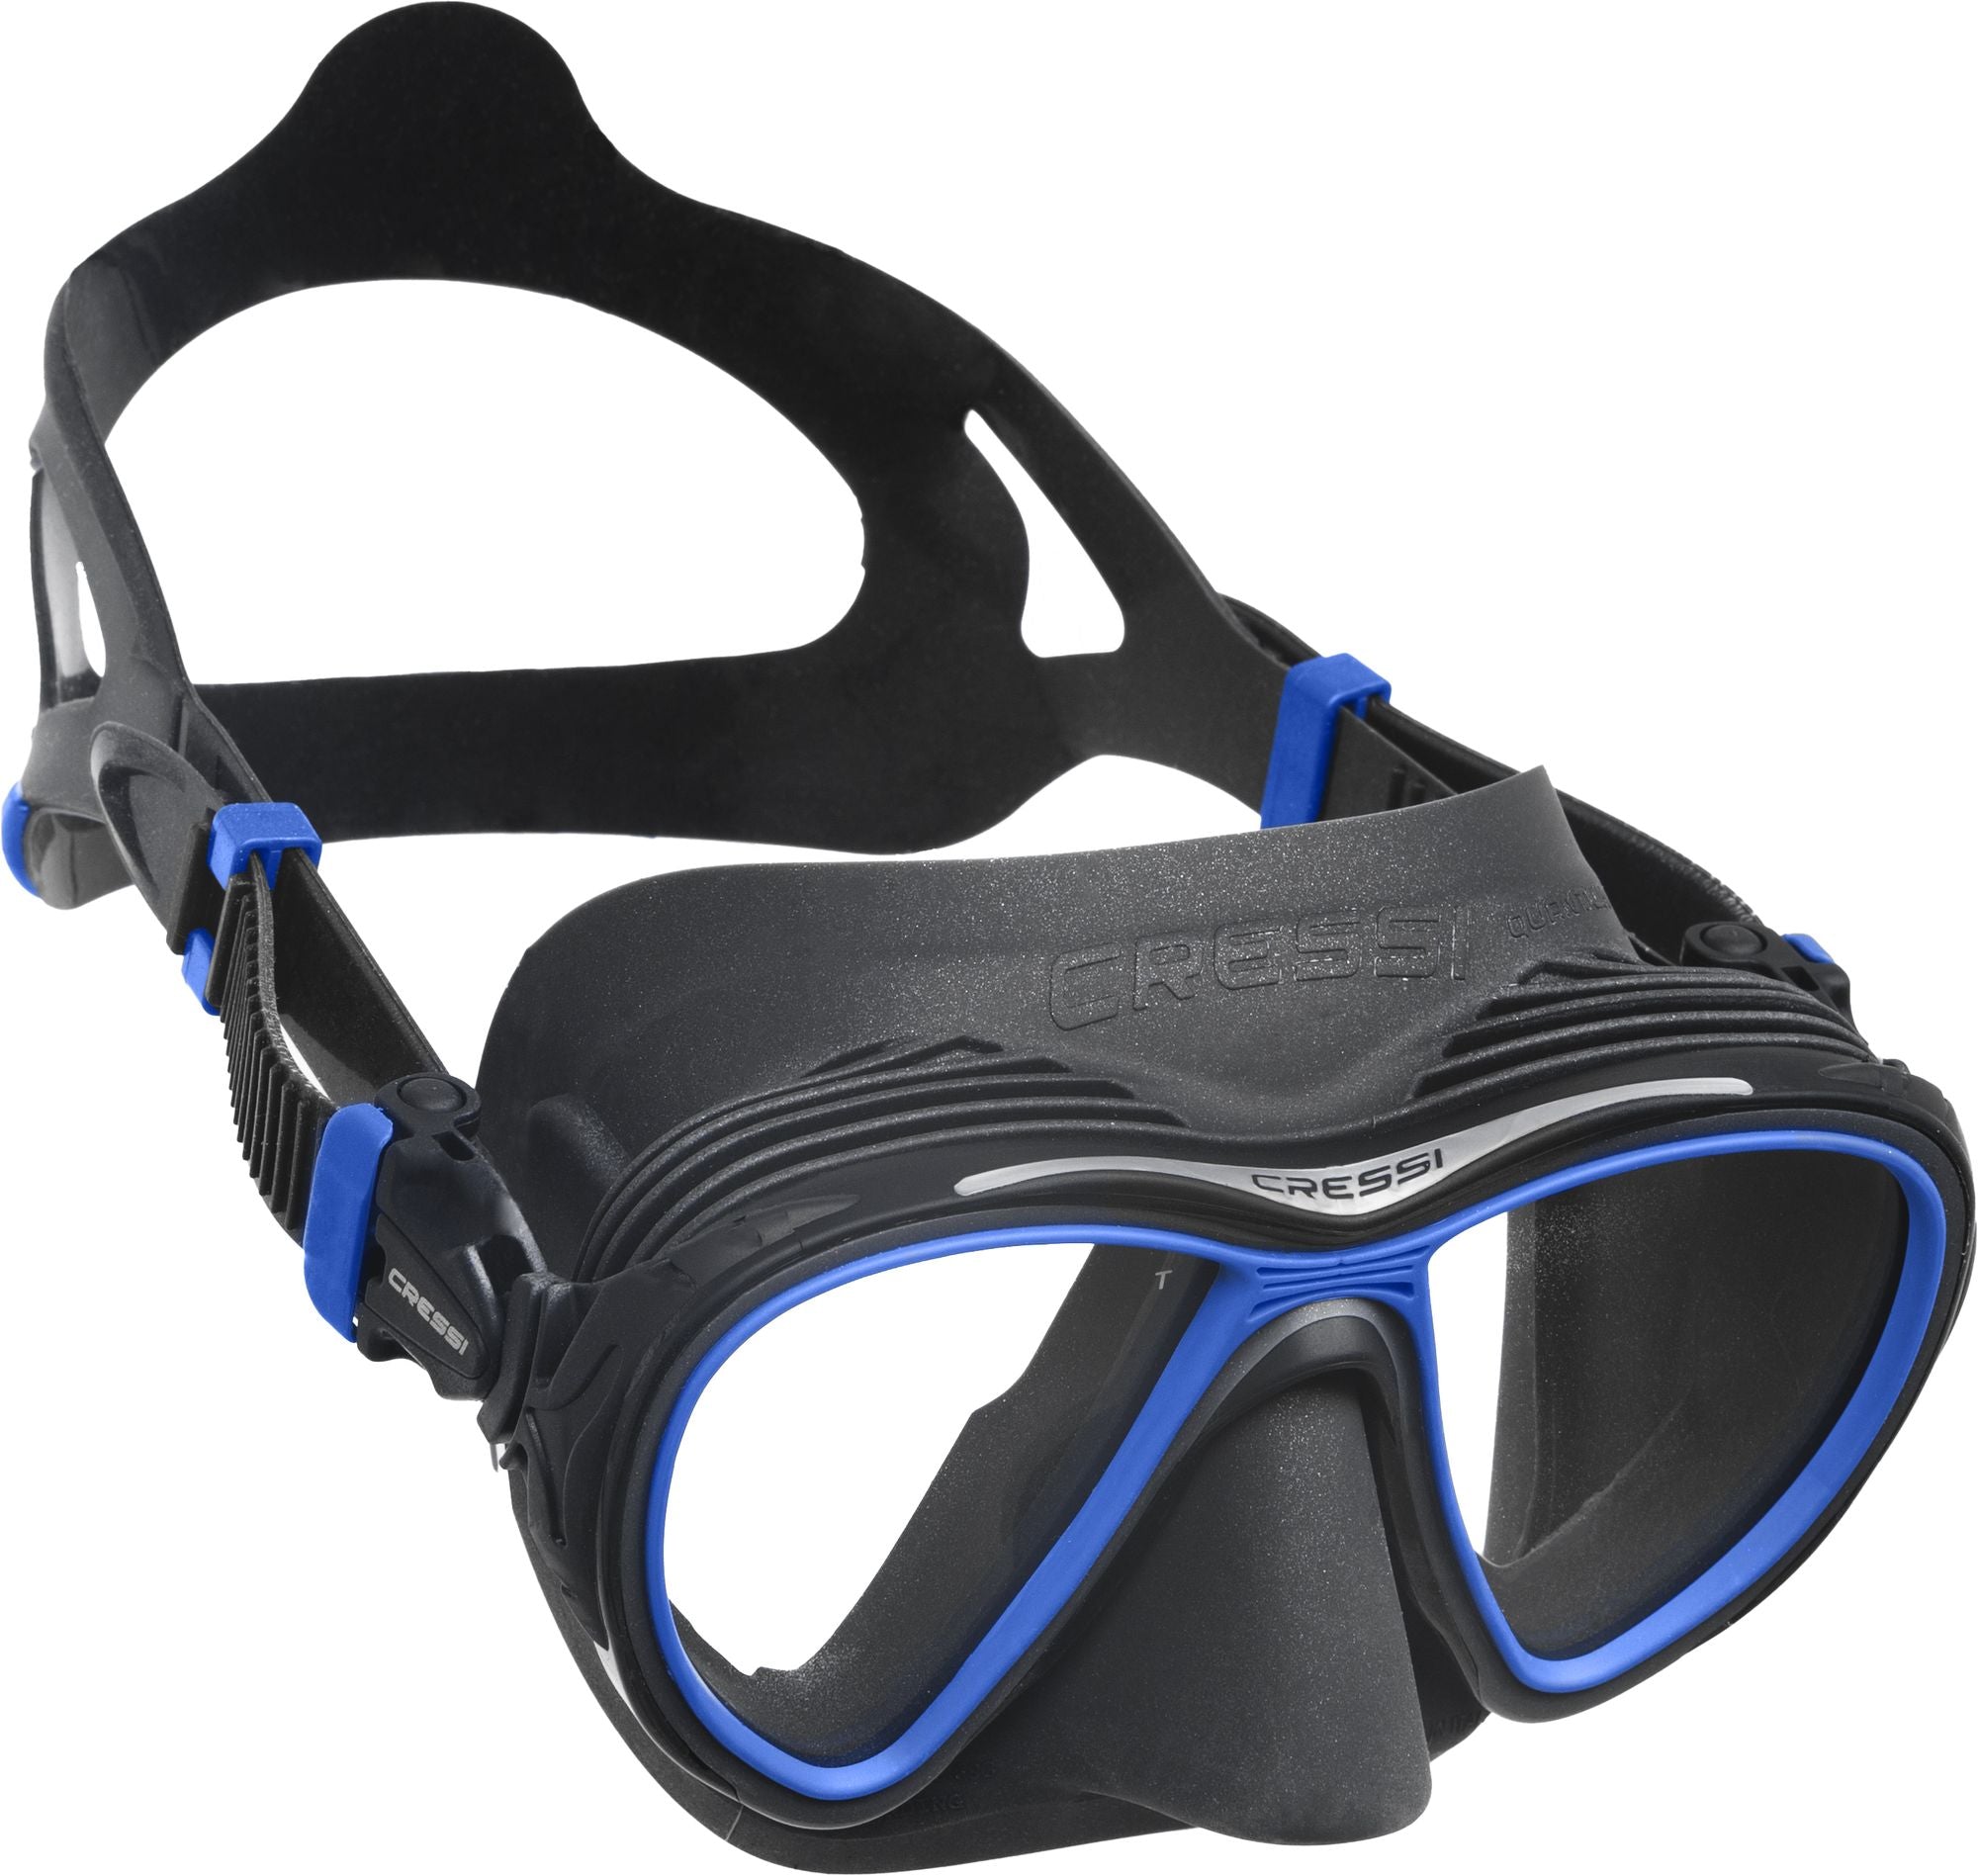 Quantum Mask - Scuba mask, Snorkelling mask